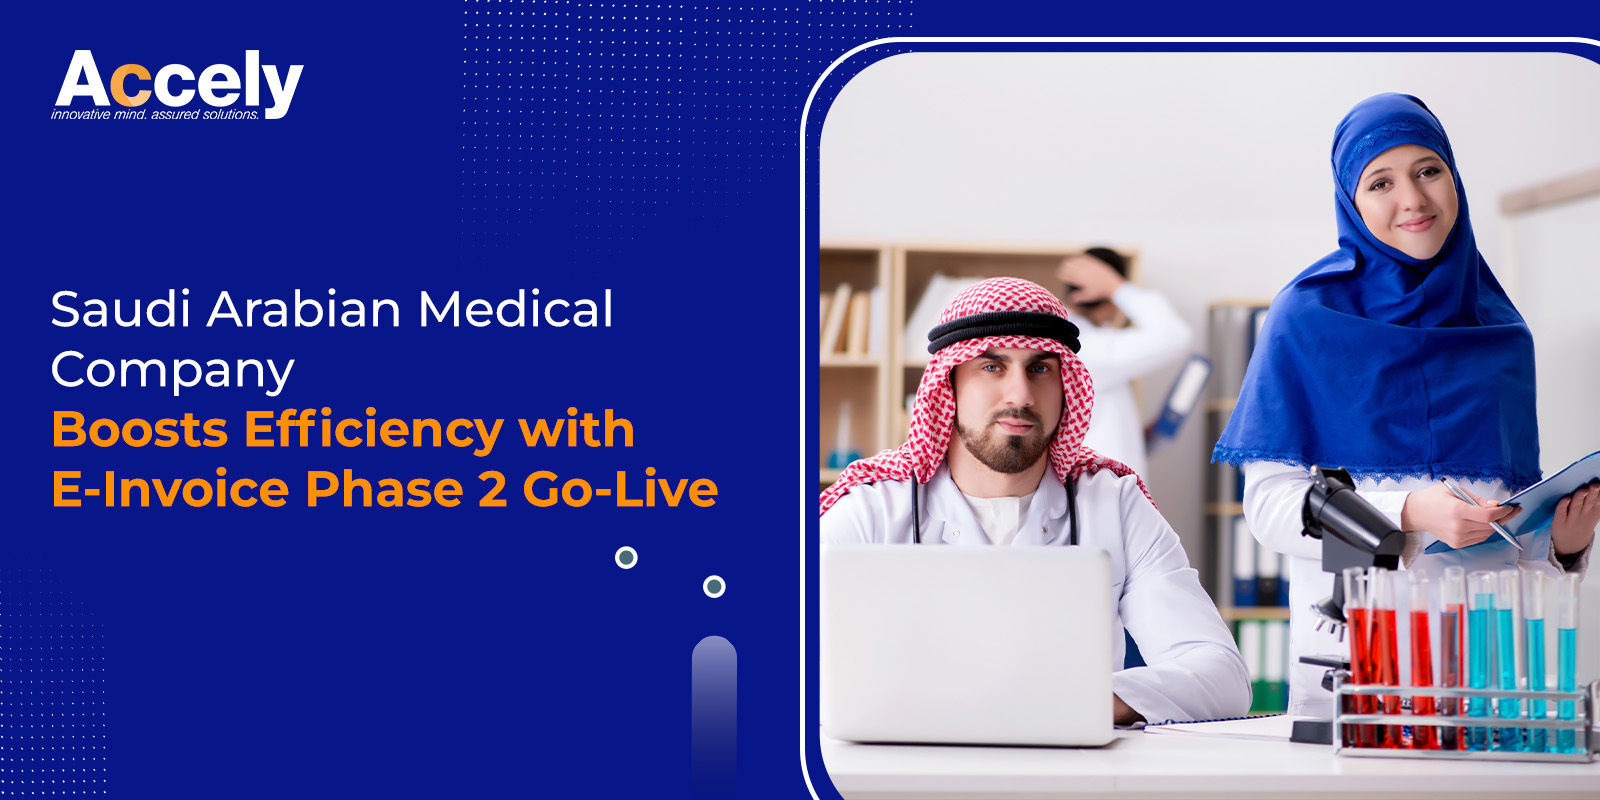 Saudi Arabian Medical Company Boosts Efficiency with E-Invoice Phase 2 Go-Live